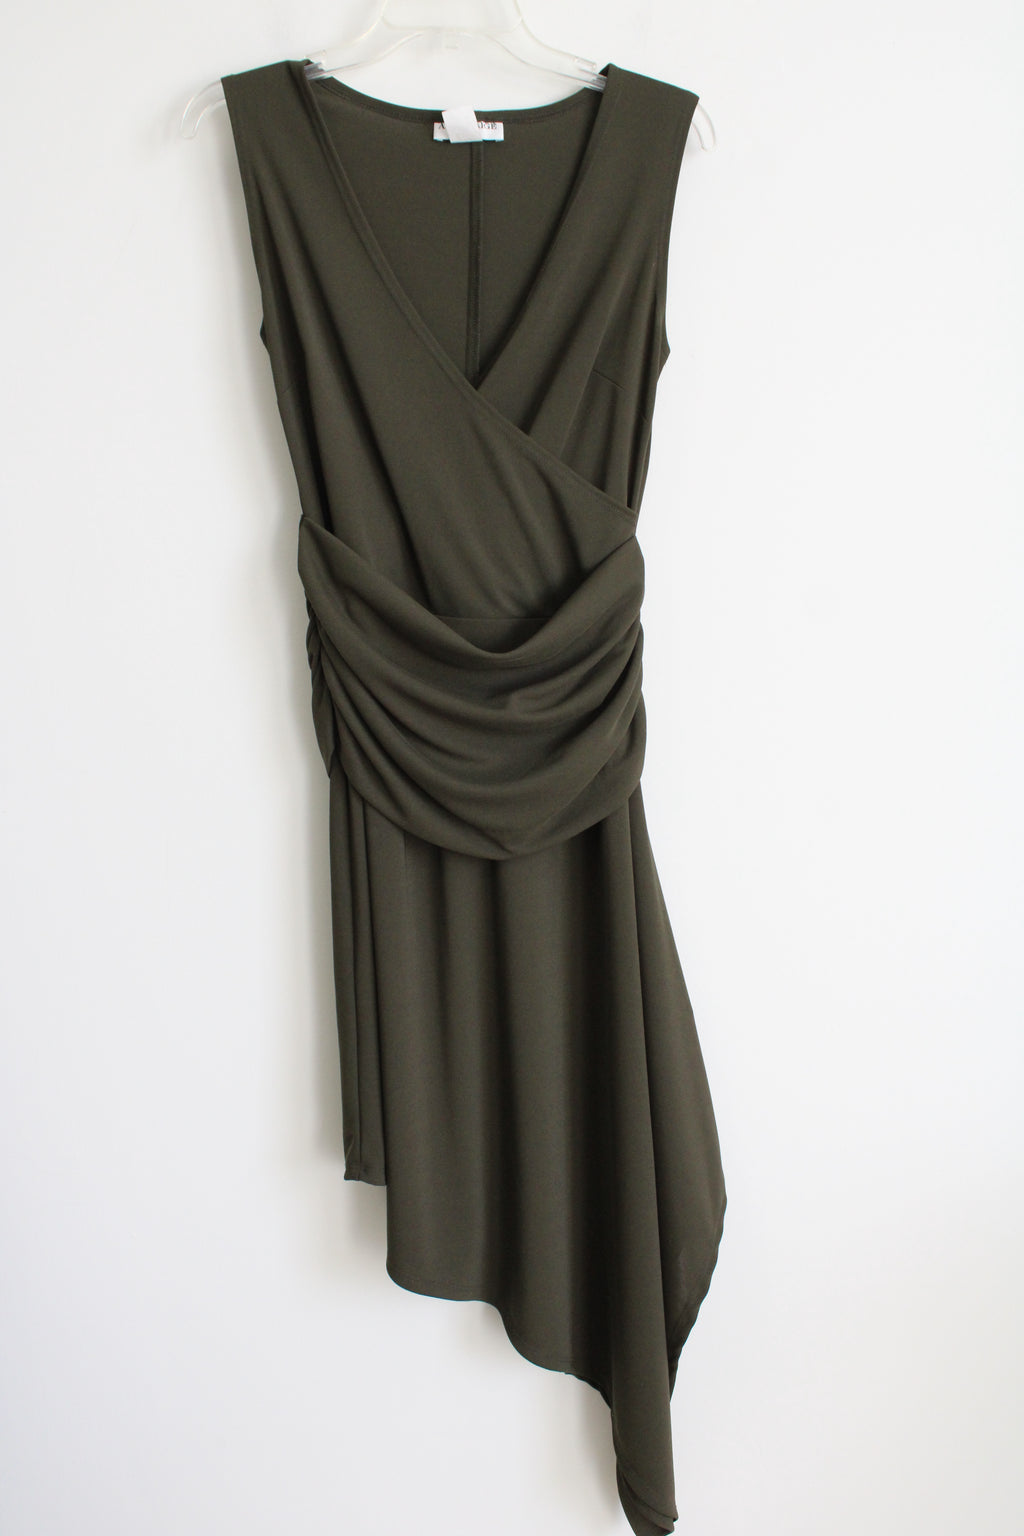 Alyn Paige Olive Asymmetrical Dress | S